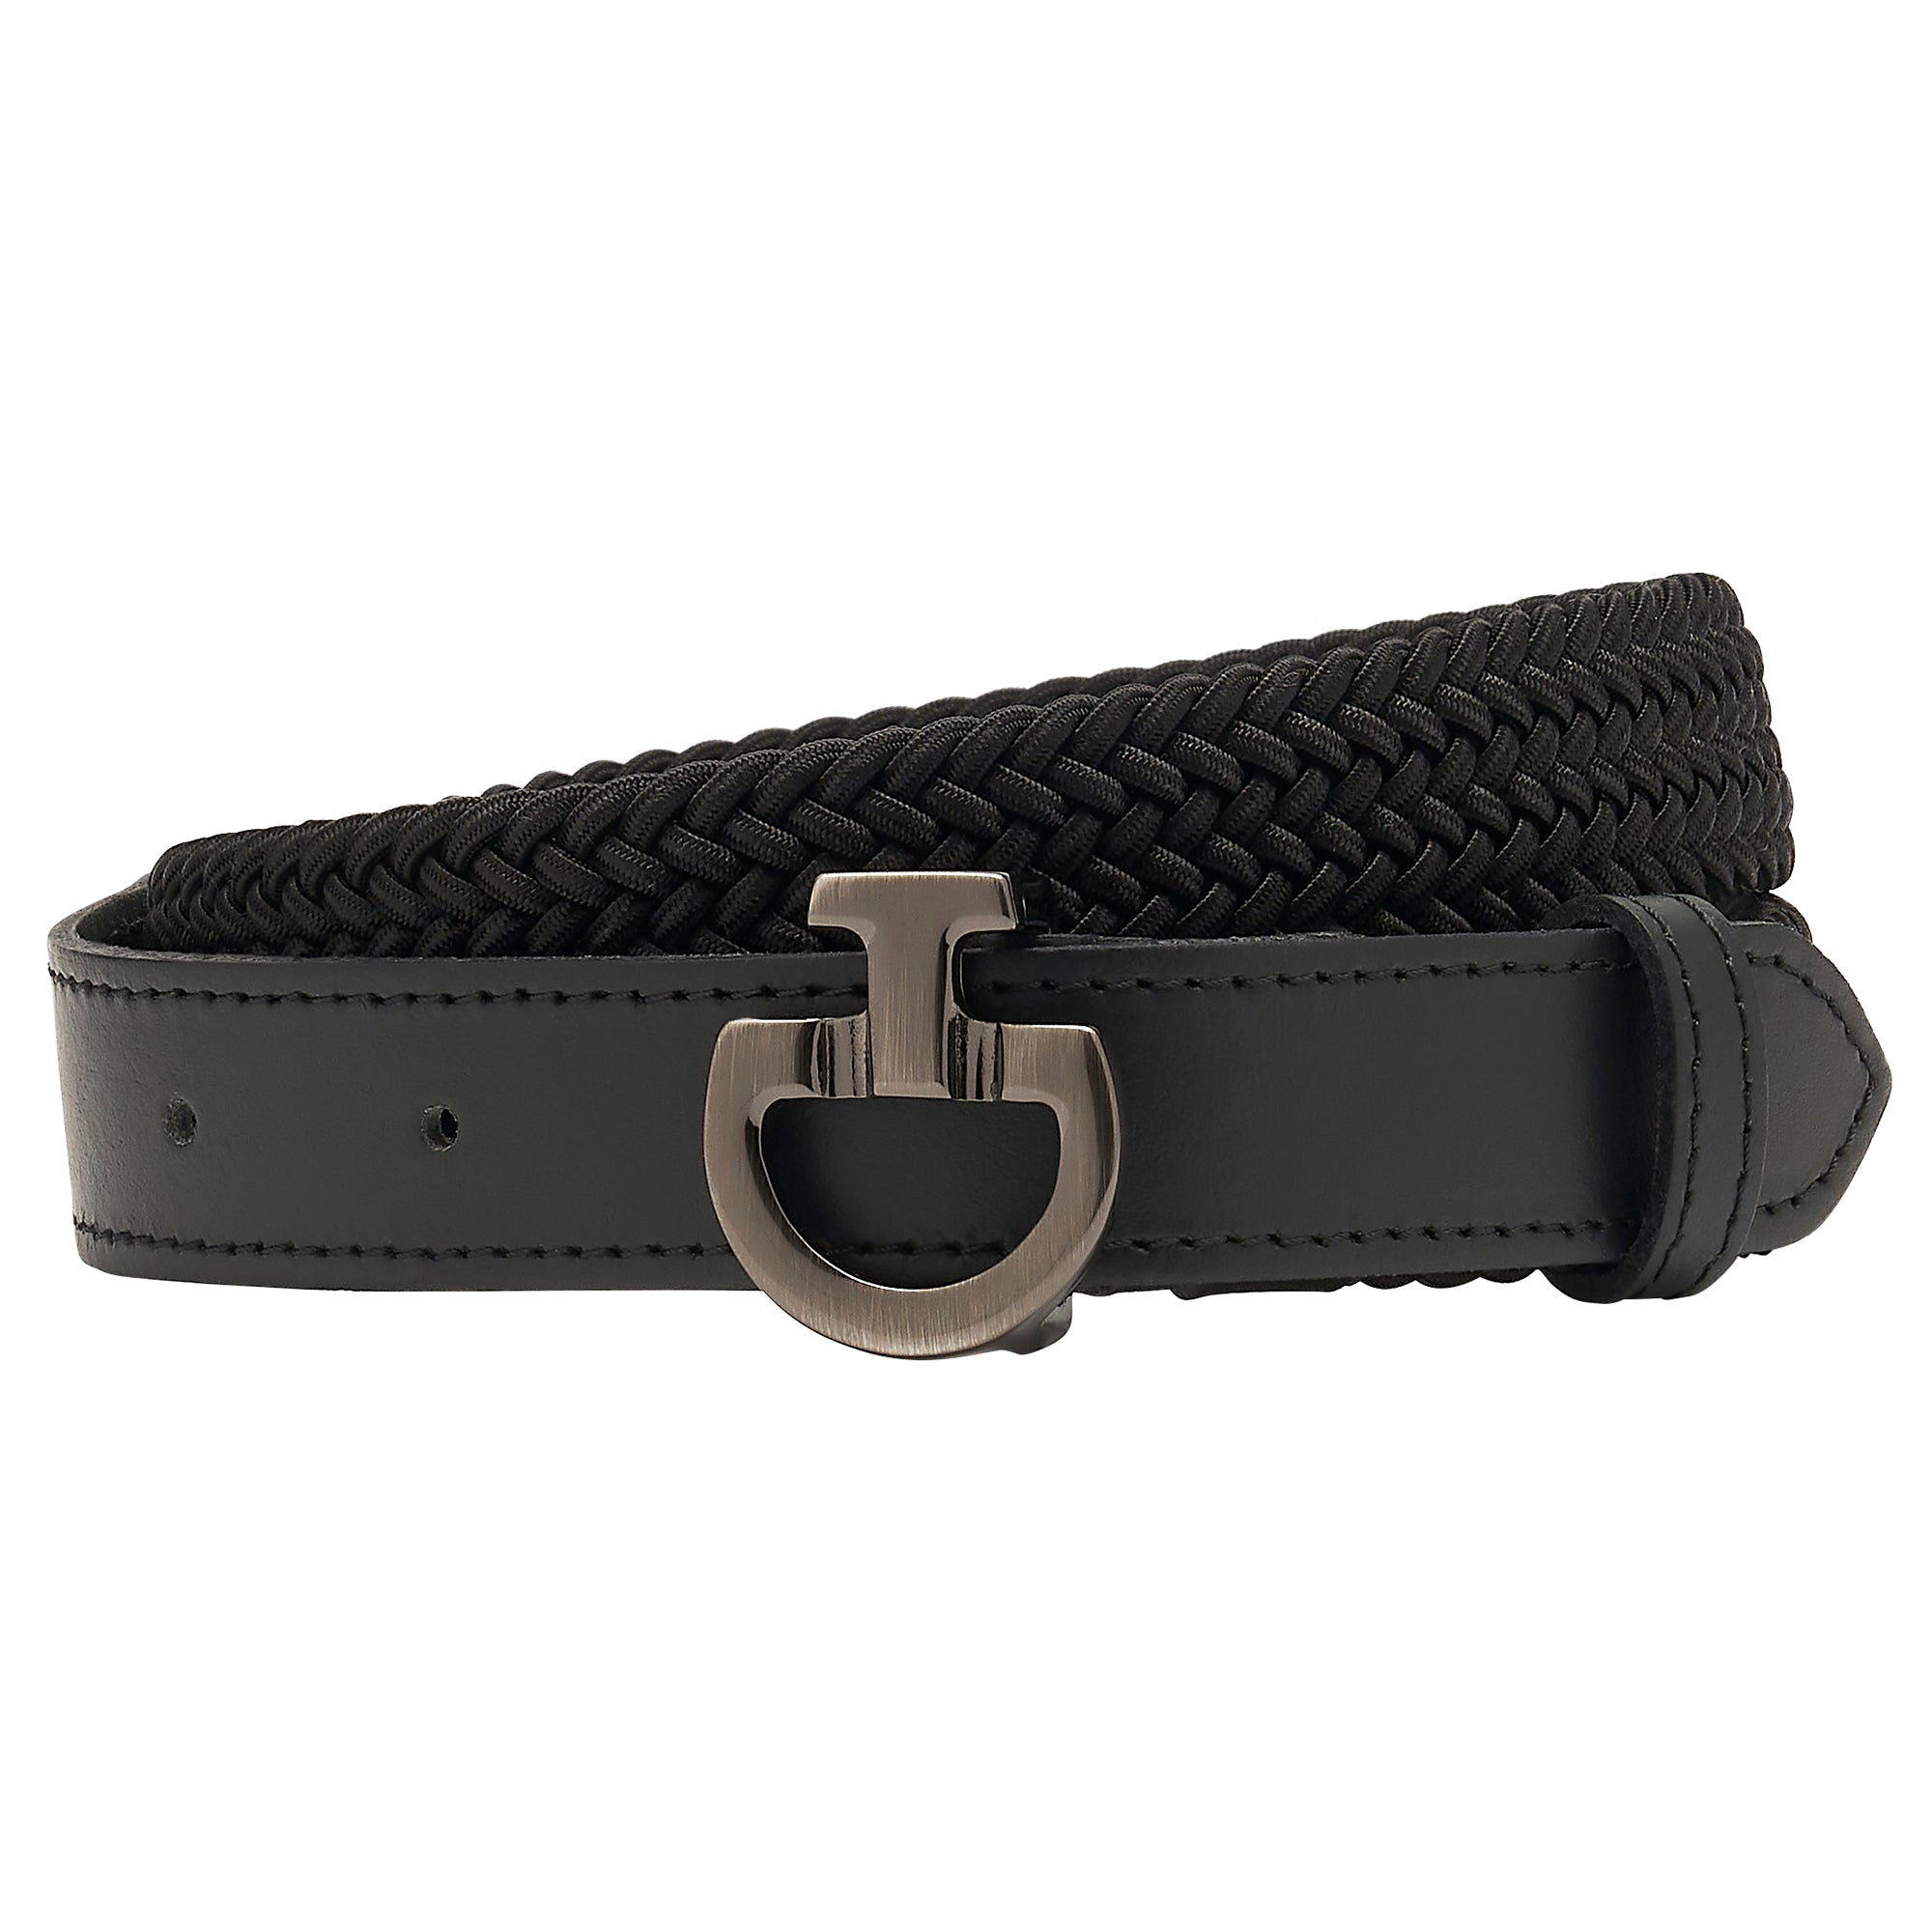 Children’s belt “Rayon Black”